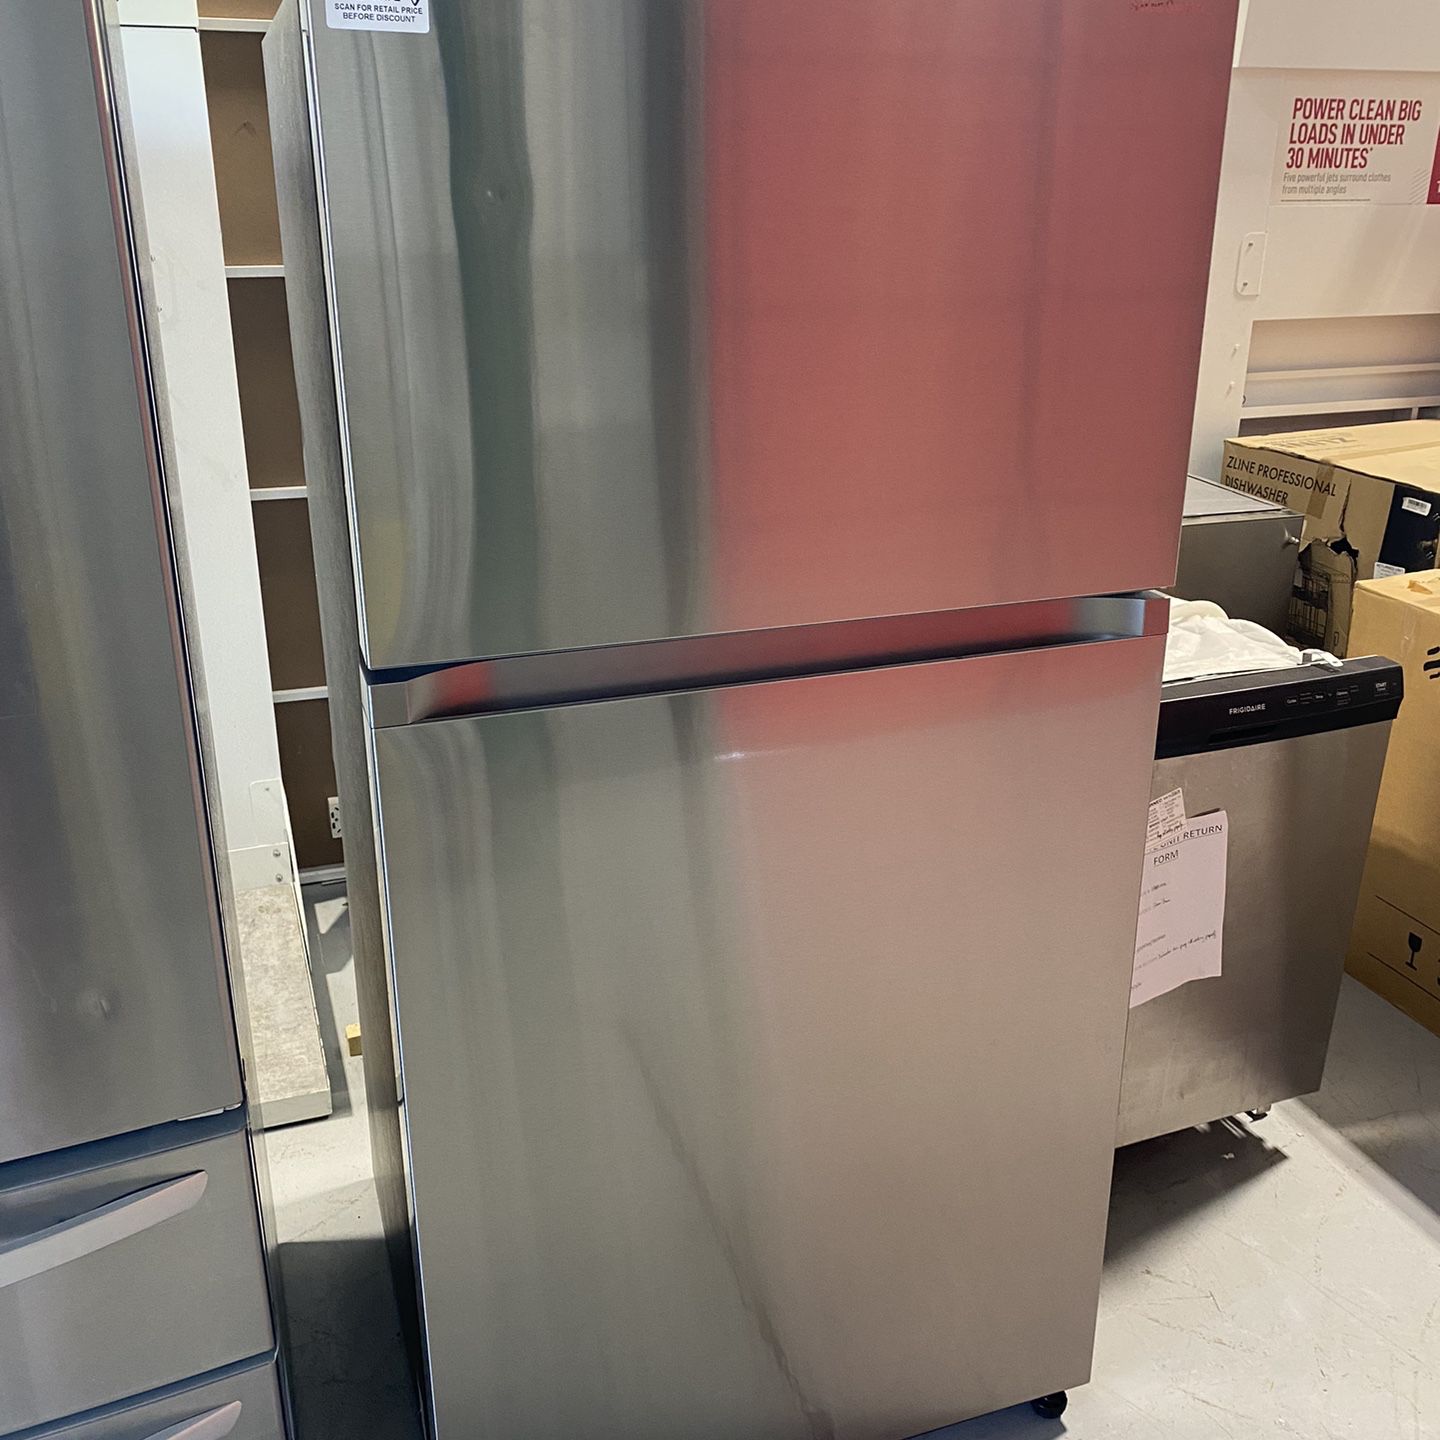 Stainless Steel 21 Cu. Ft. Top Freezer Refrigerator With FlexZone 